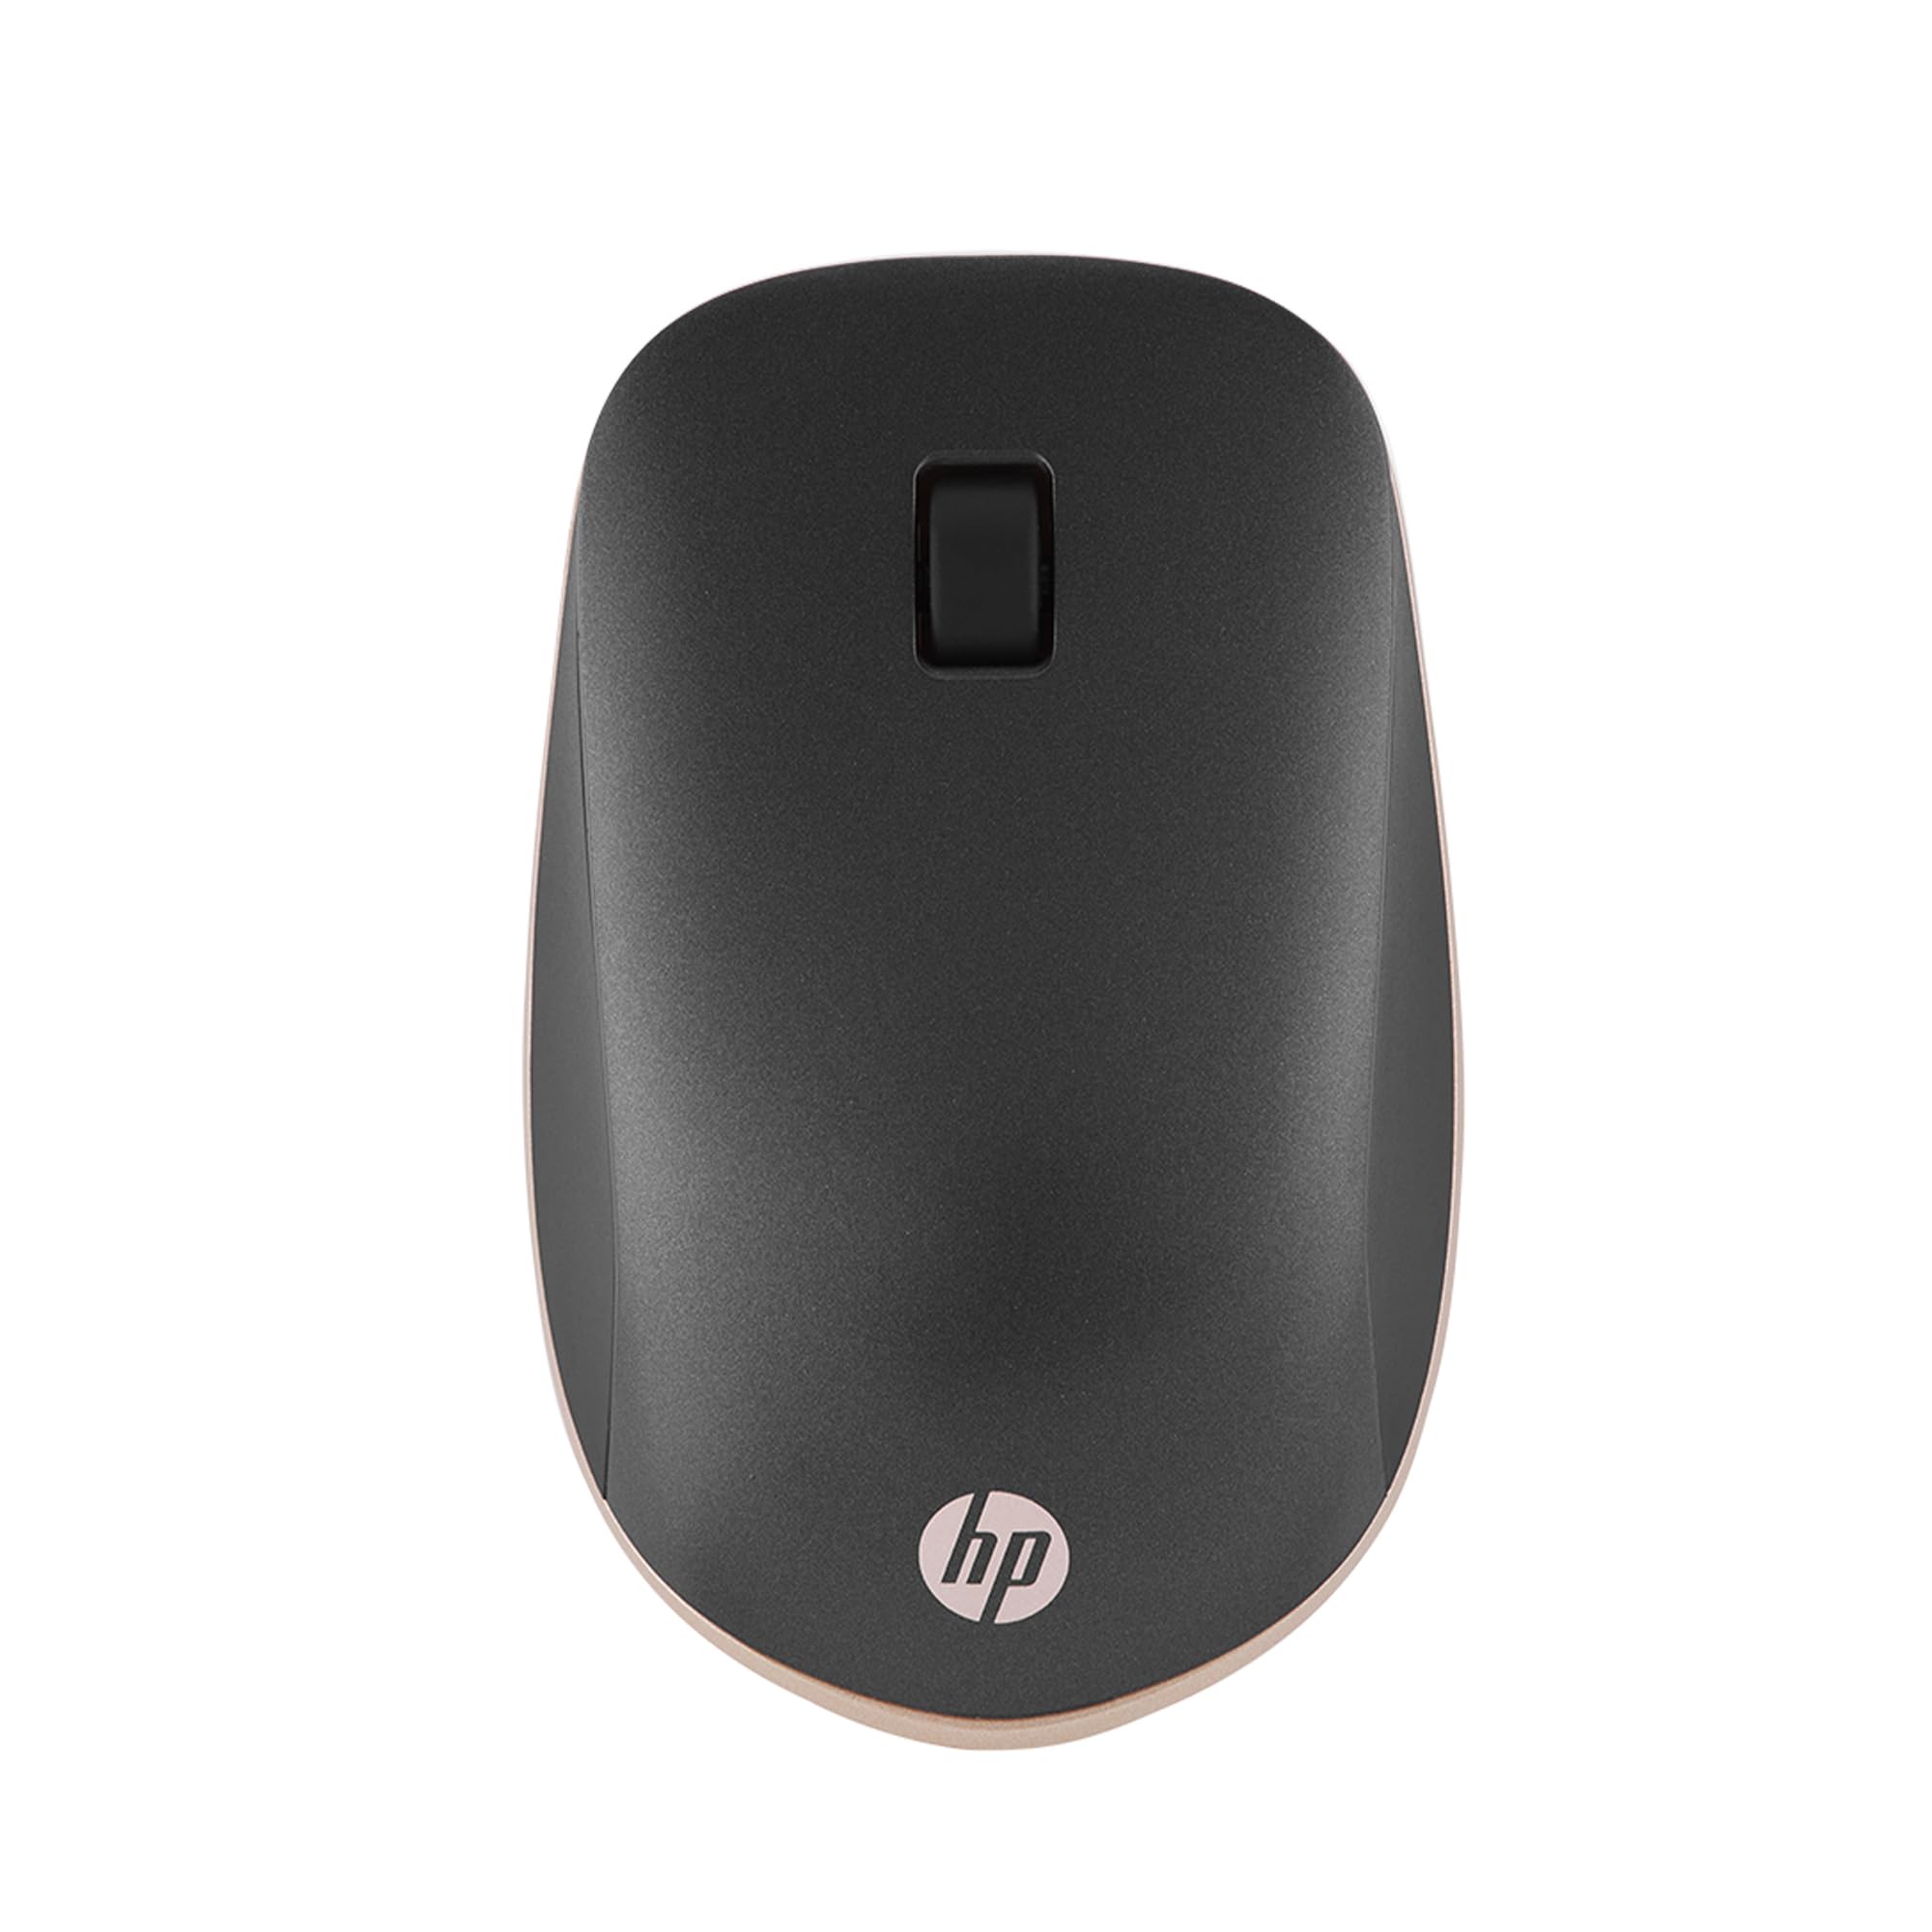 HP ワイヤレスマウス Bluetooth ワイヤレス 無線 薄型 マウス HP 410 Slim スリム ブラック(型番:4M0X5AA#UUF) Bluetooth5 iPad ChromeOS Mac【国内正規品】